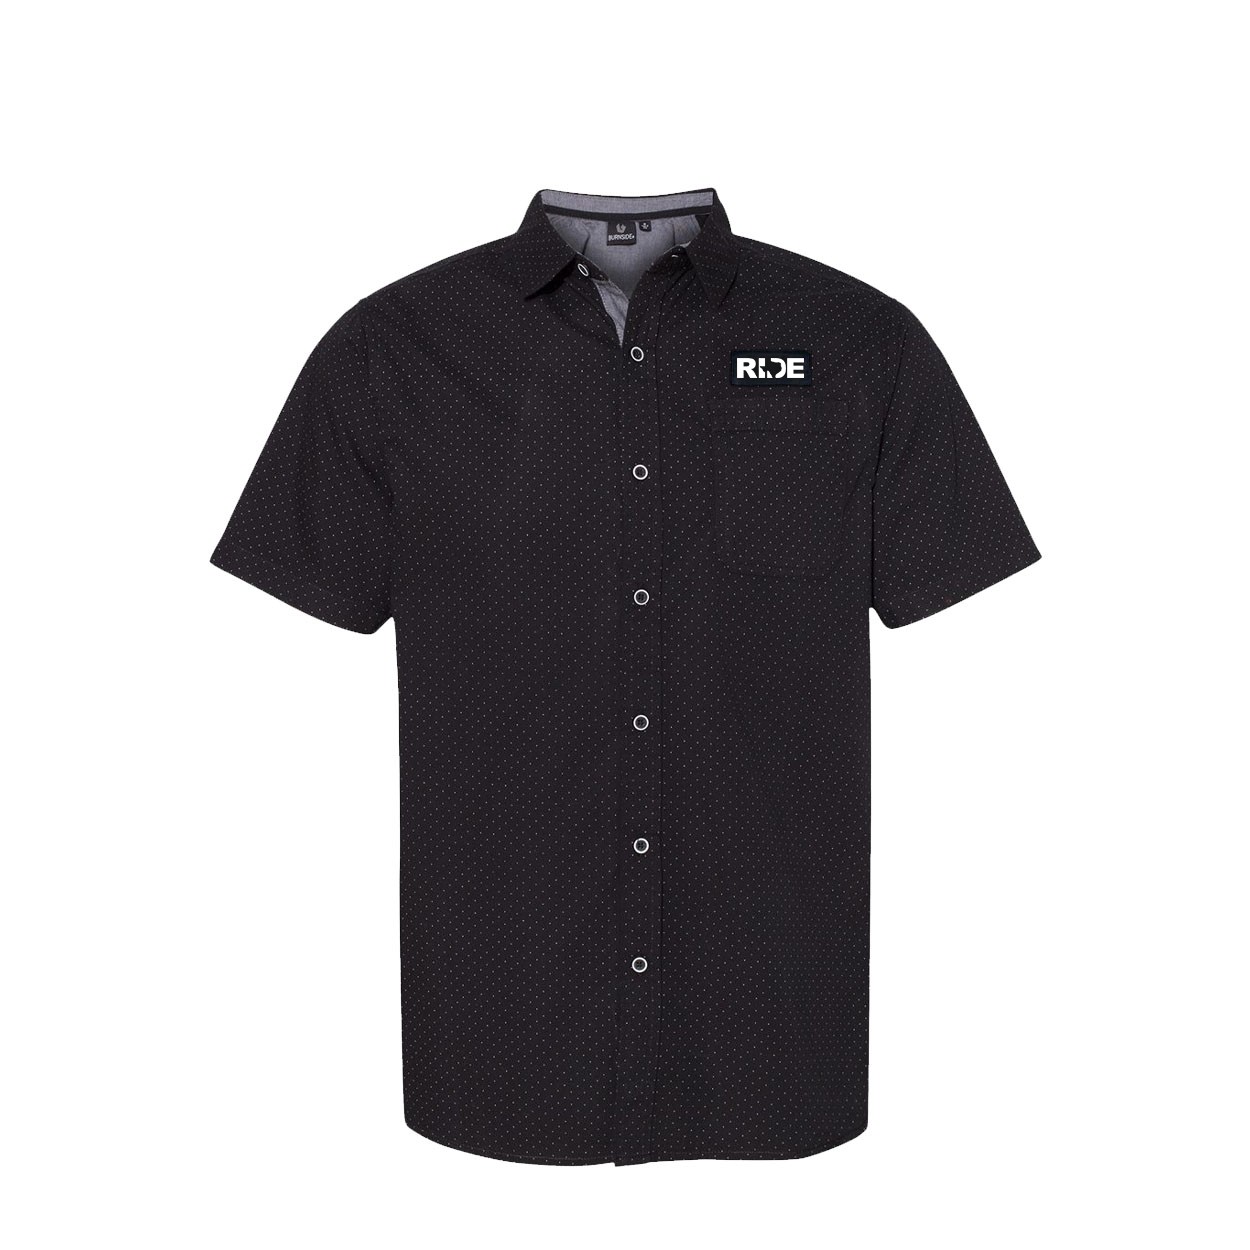 Ride Texas Classic Poplin Short Sleeve Woven Shirt Black/White Dot (White Logo)